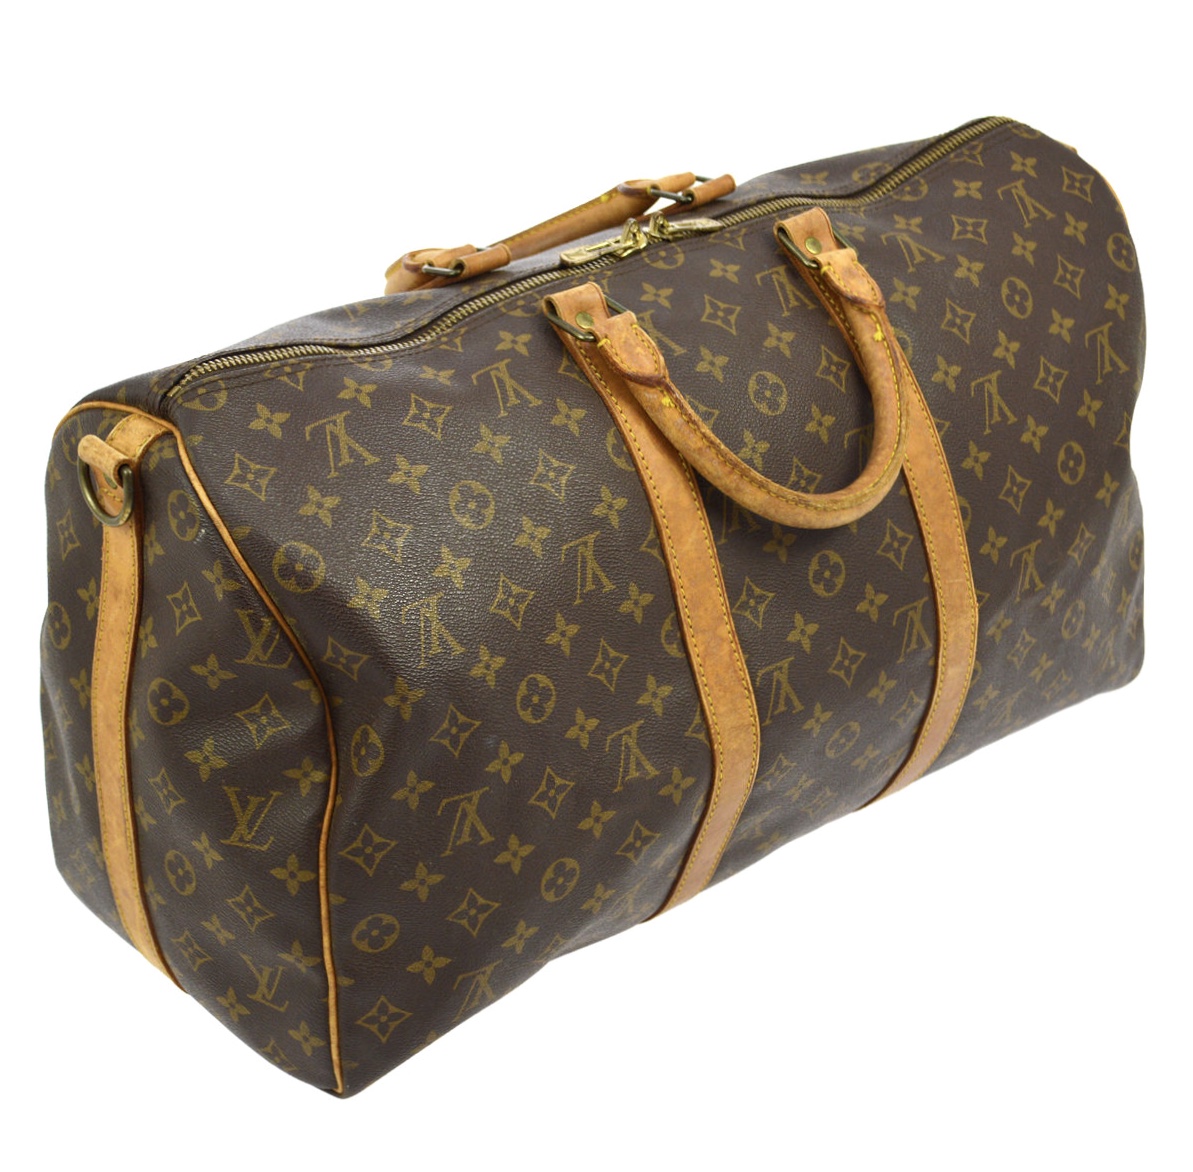 Louis Vuitton Monogram Duffel Bag on SALE